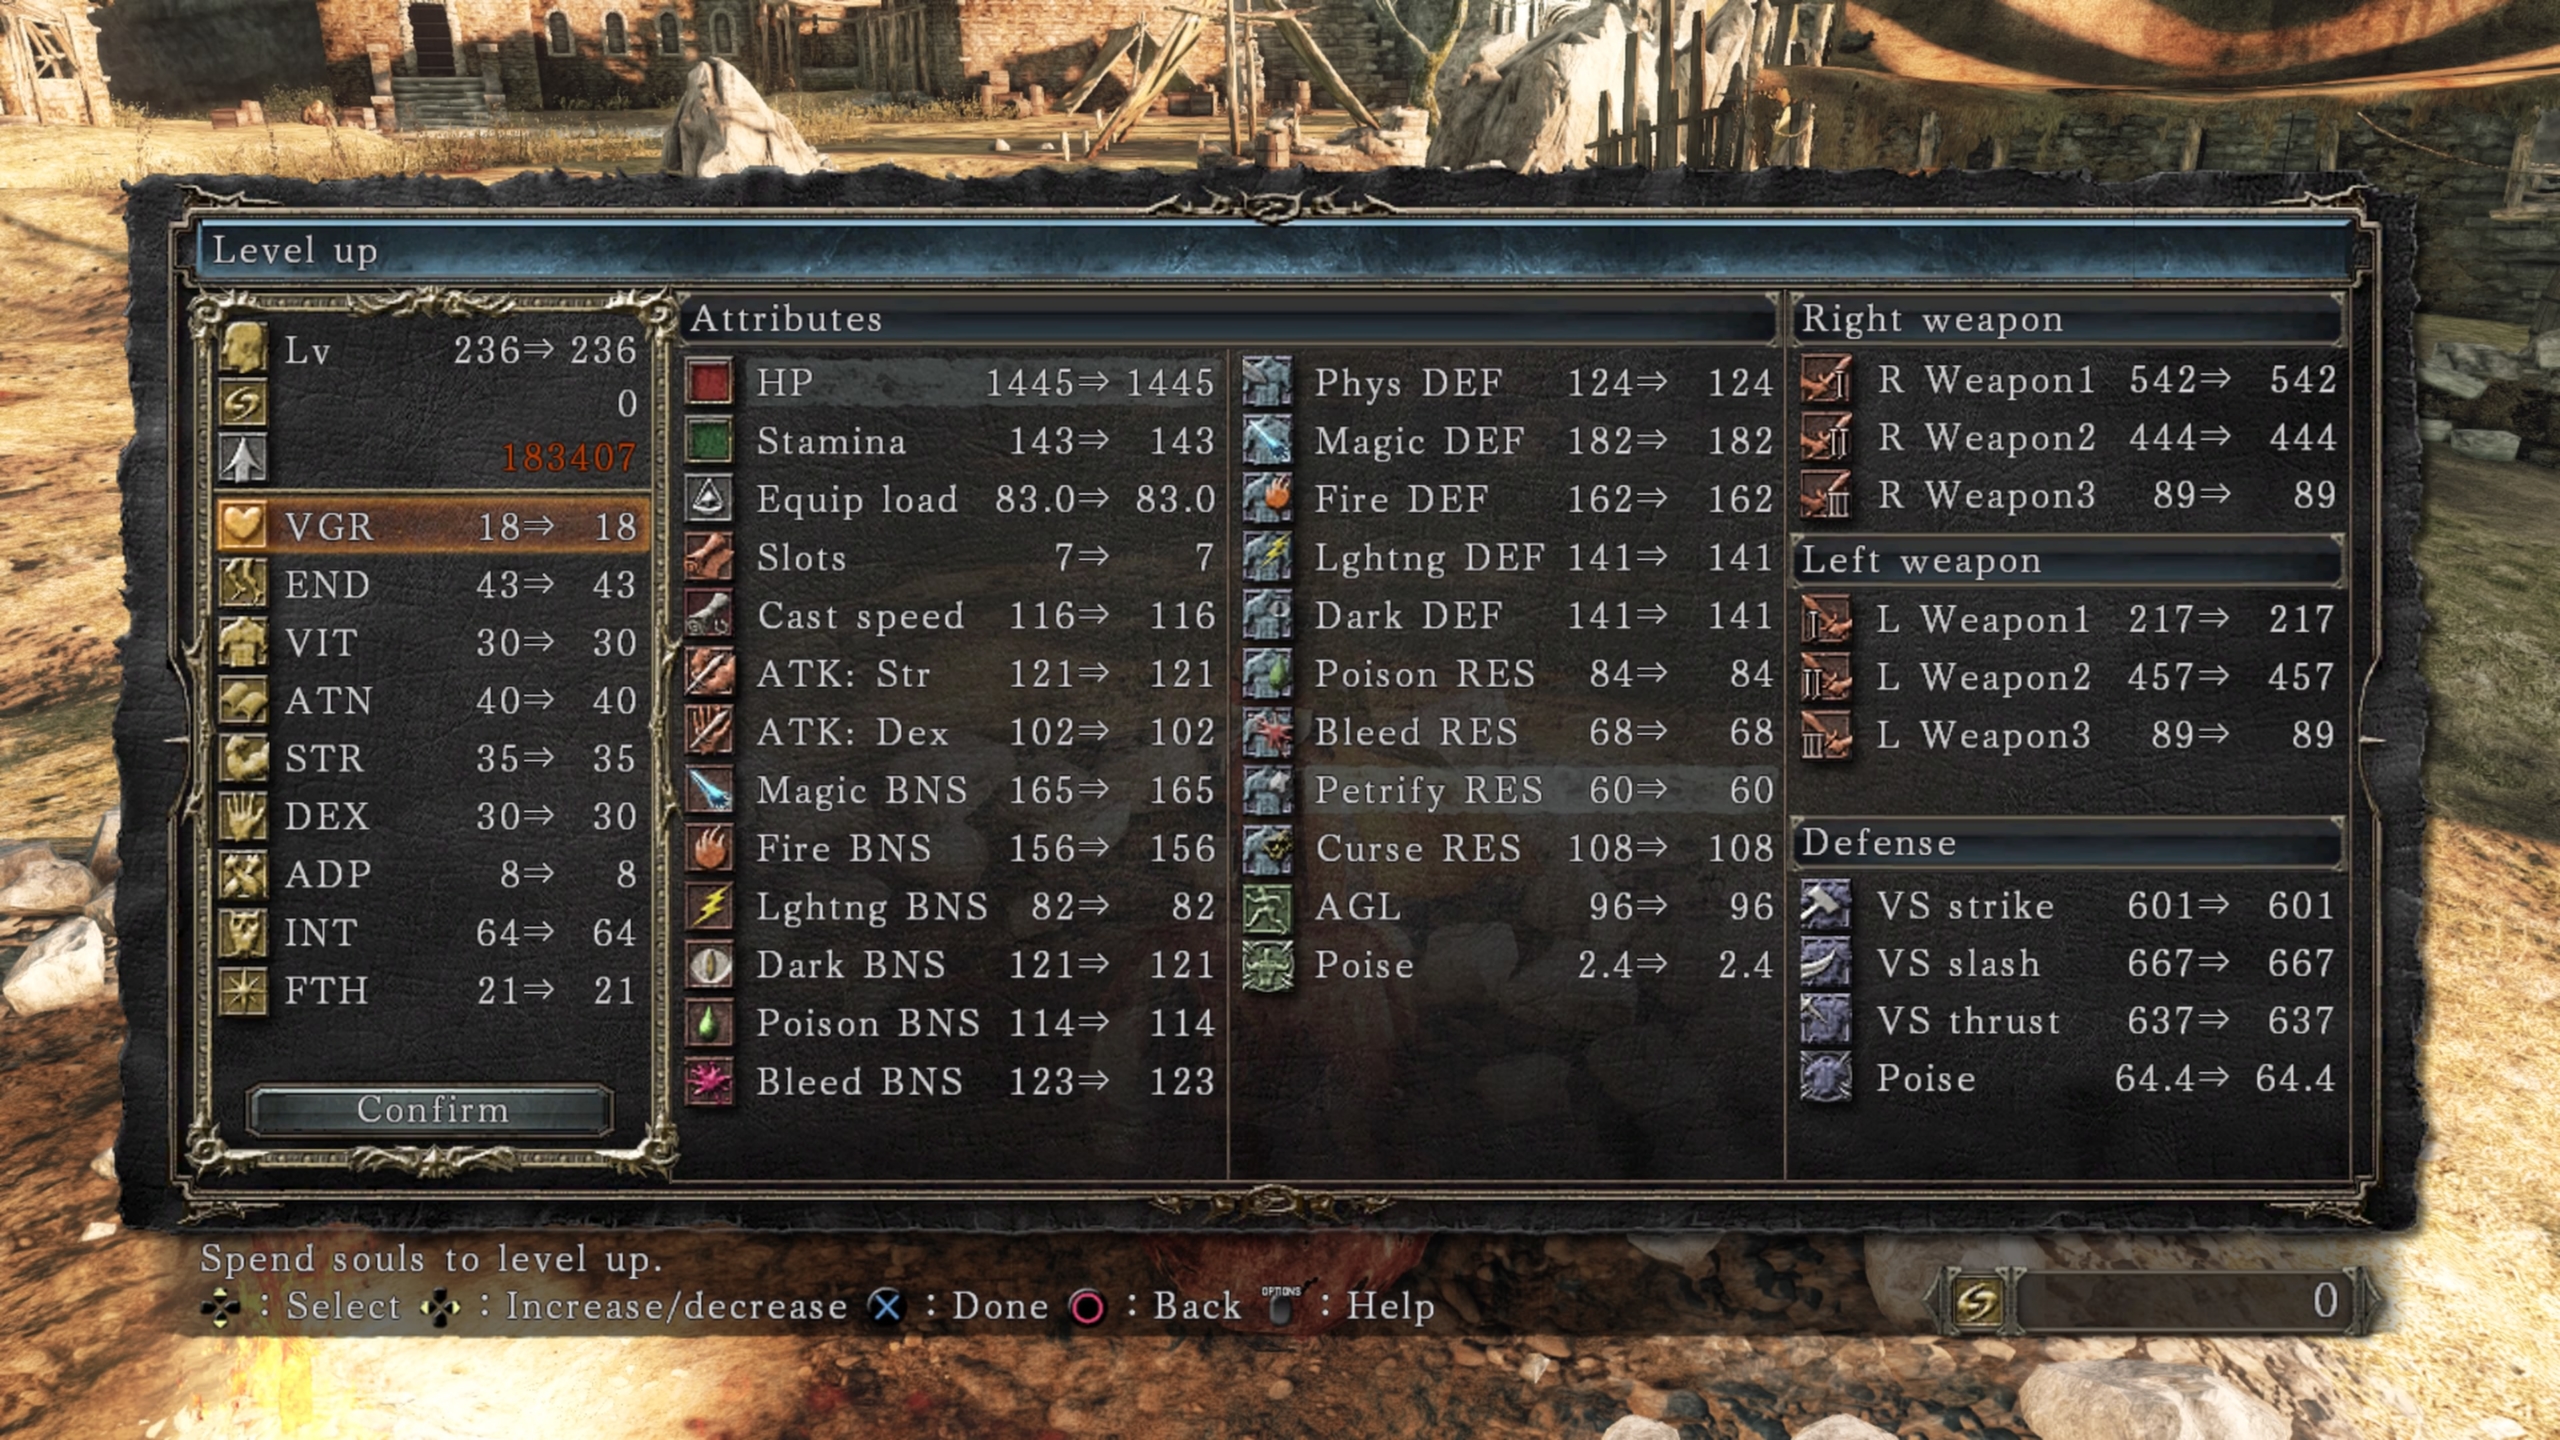 Dark Souls 2 bosses tier list based on their skill level. : r/DarkSouls2